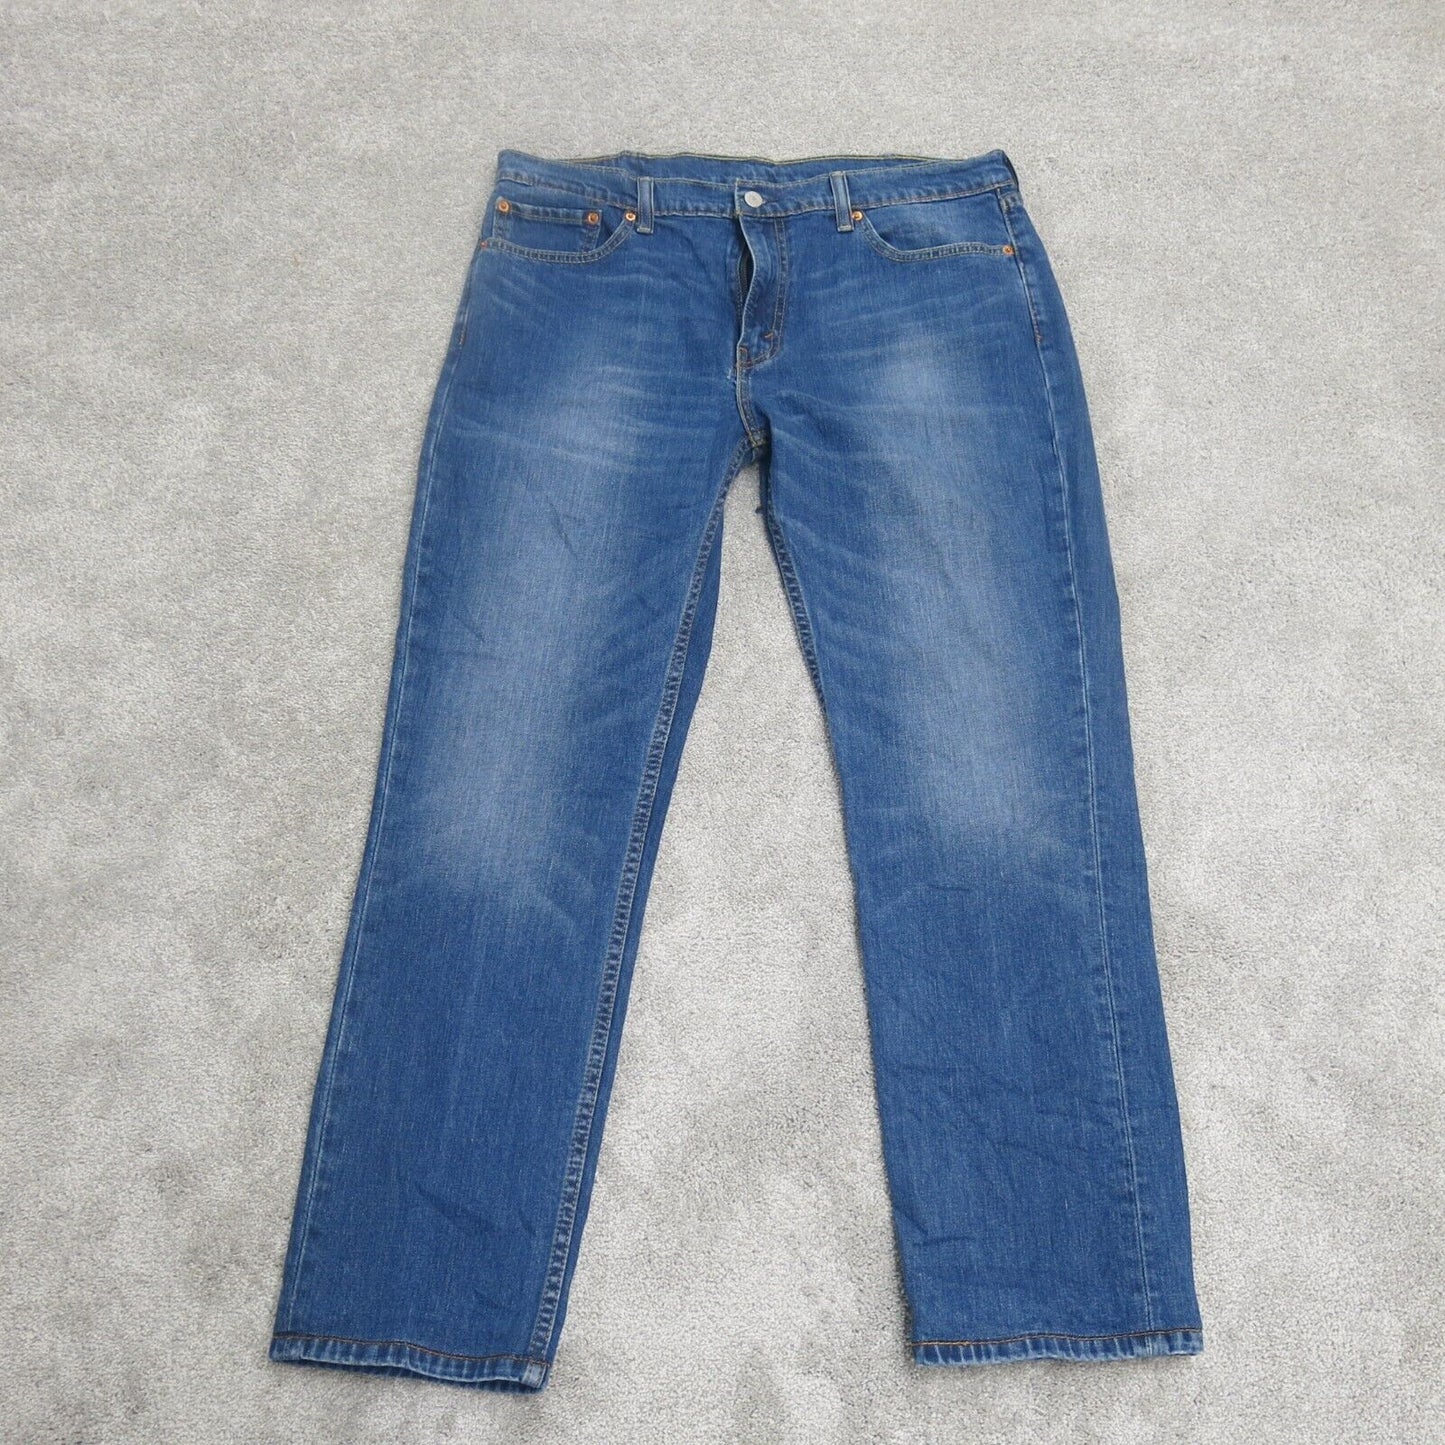 Levi Strauss Mens Skinny Jeans Straight Leg Relaxed Fit Denim Blue Size W38XL32